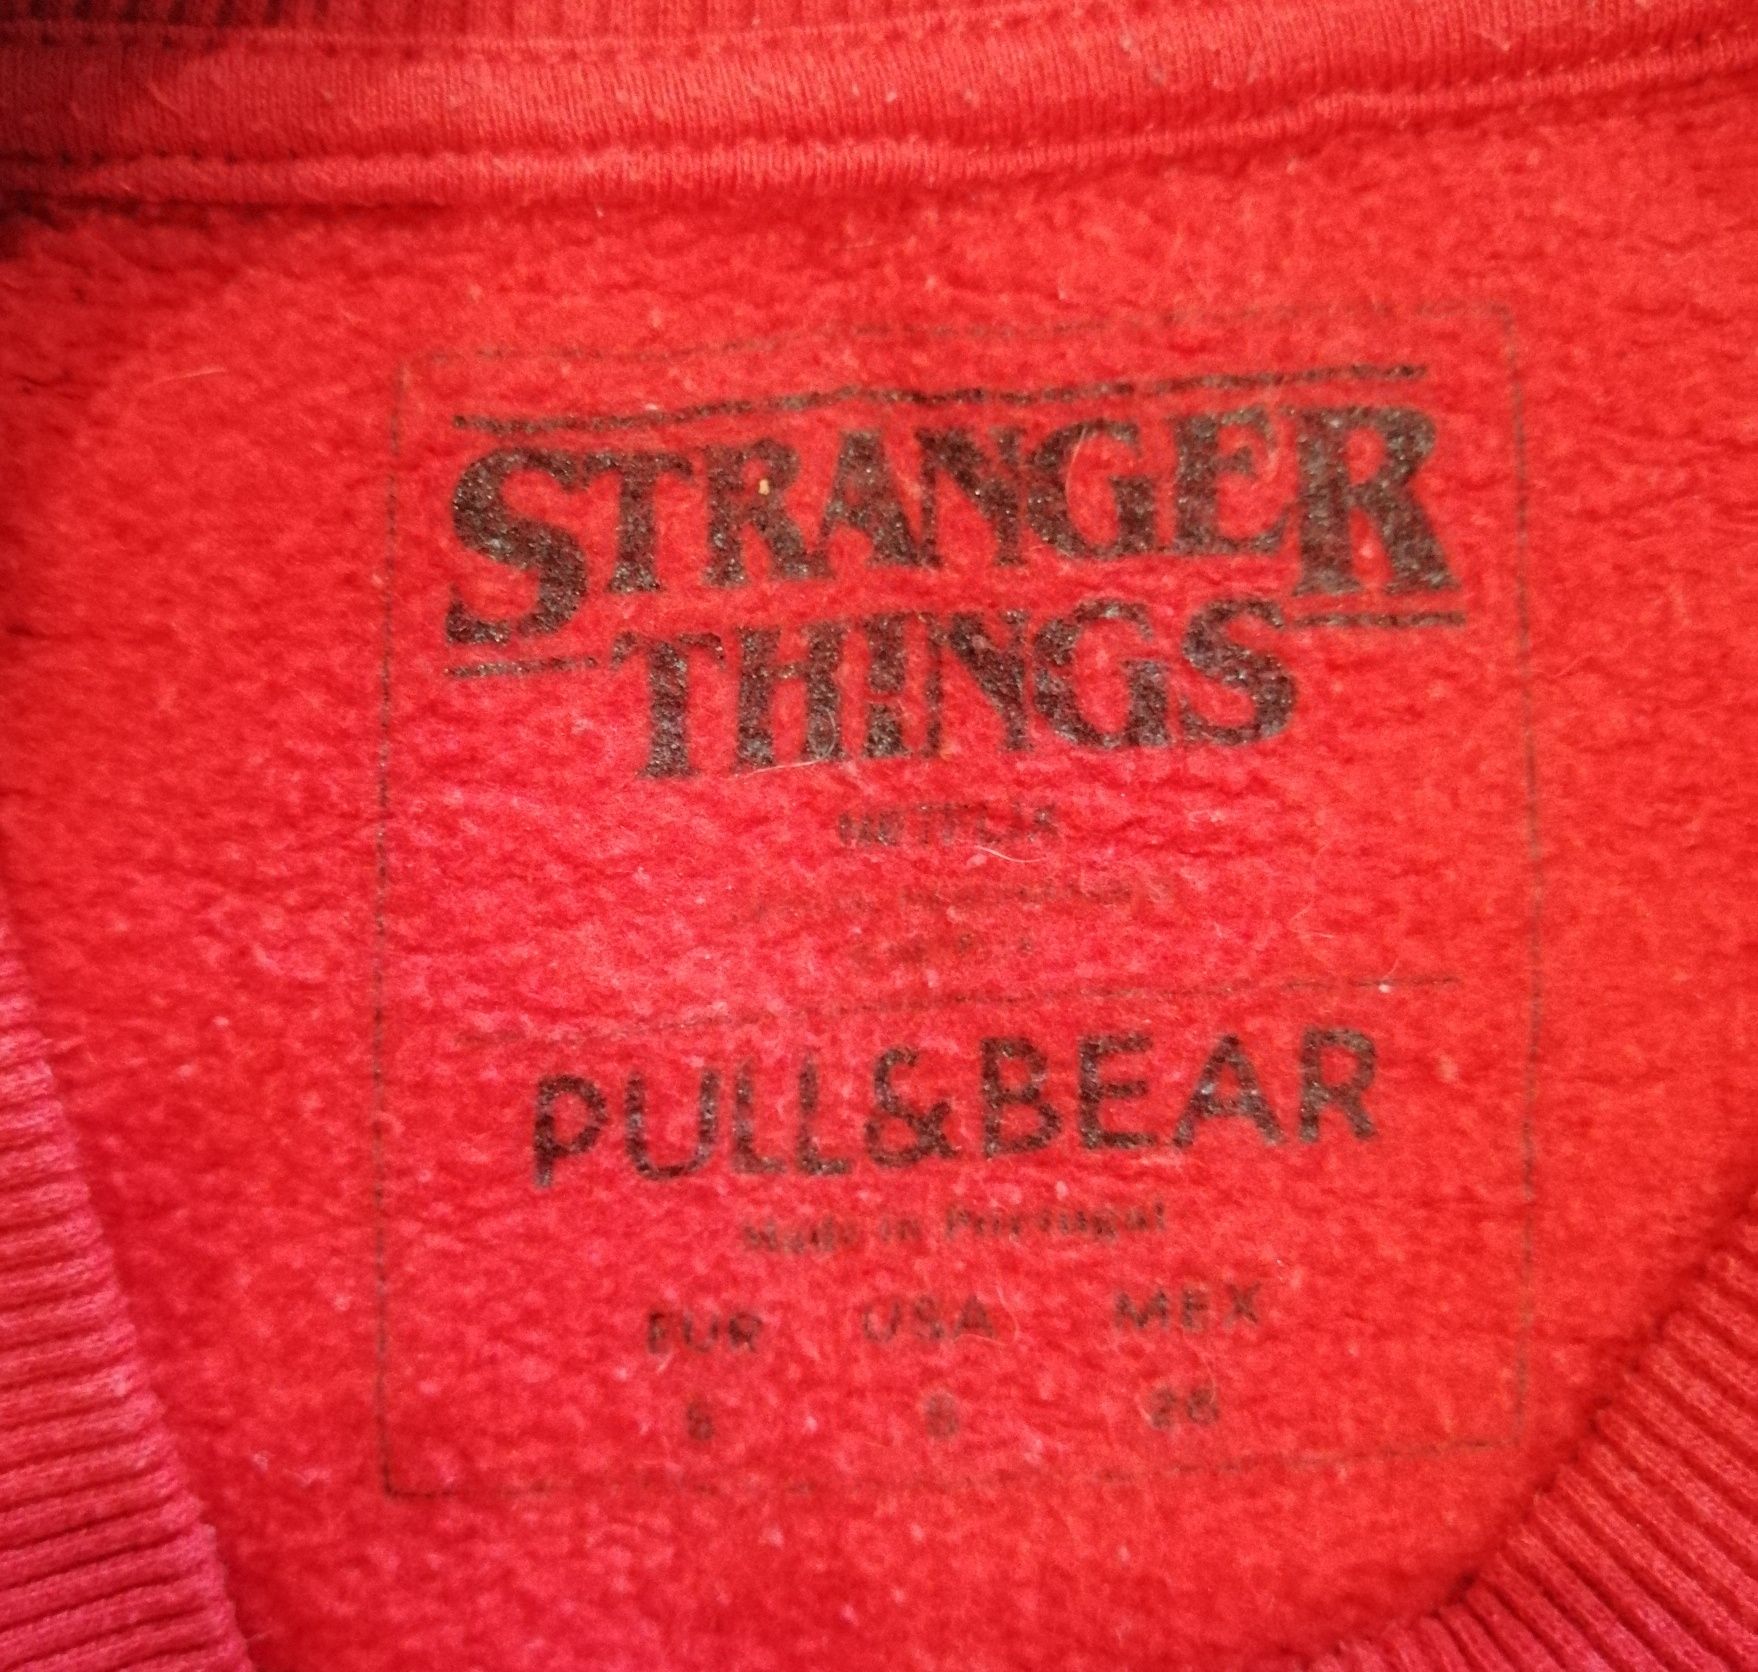 Sweatshirt Stranger Things